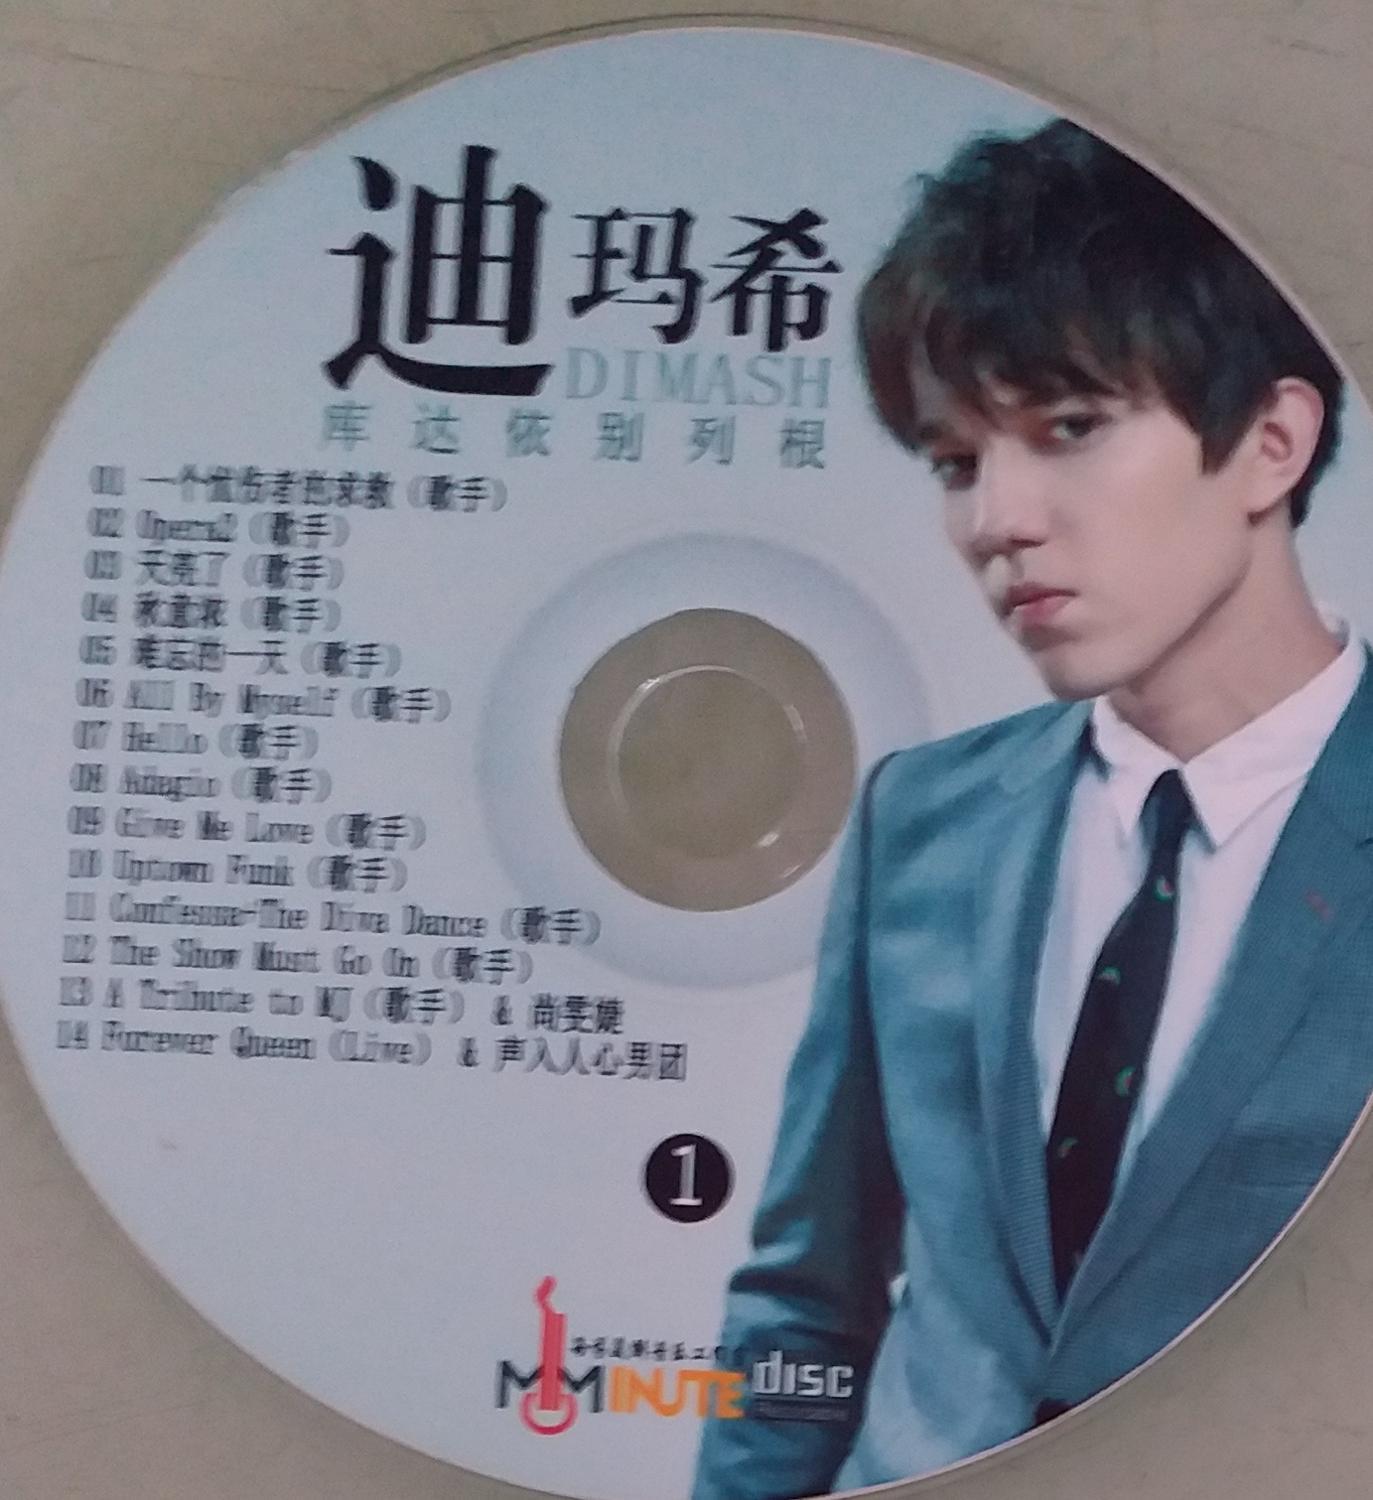 2 Pcs/Set Dimash Kudaibergen S.O.S D'un Terrien en detresse Music CD Car Cd Disc Kazakhstan Singer Fans Gift